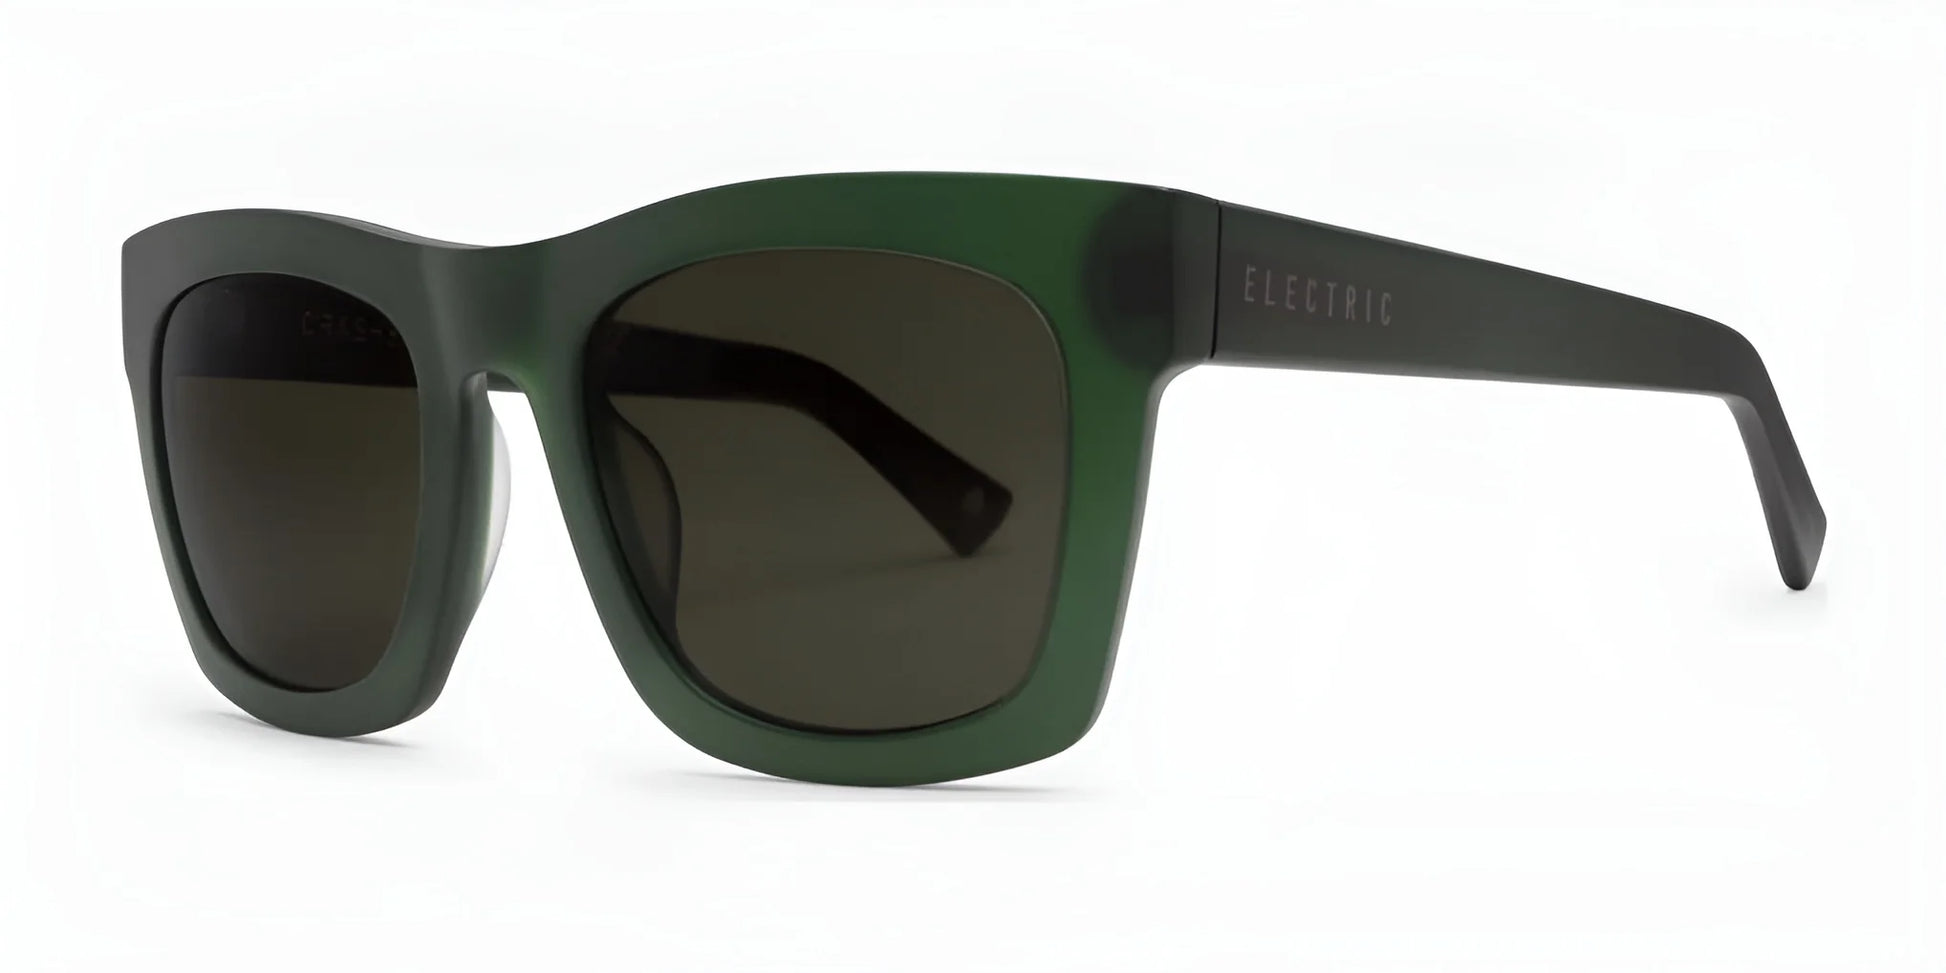 Electric Jason Momoa Crasher L Sunglasses British Racing Green / Grey Polarized